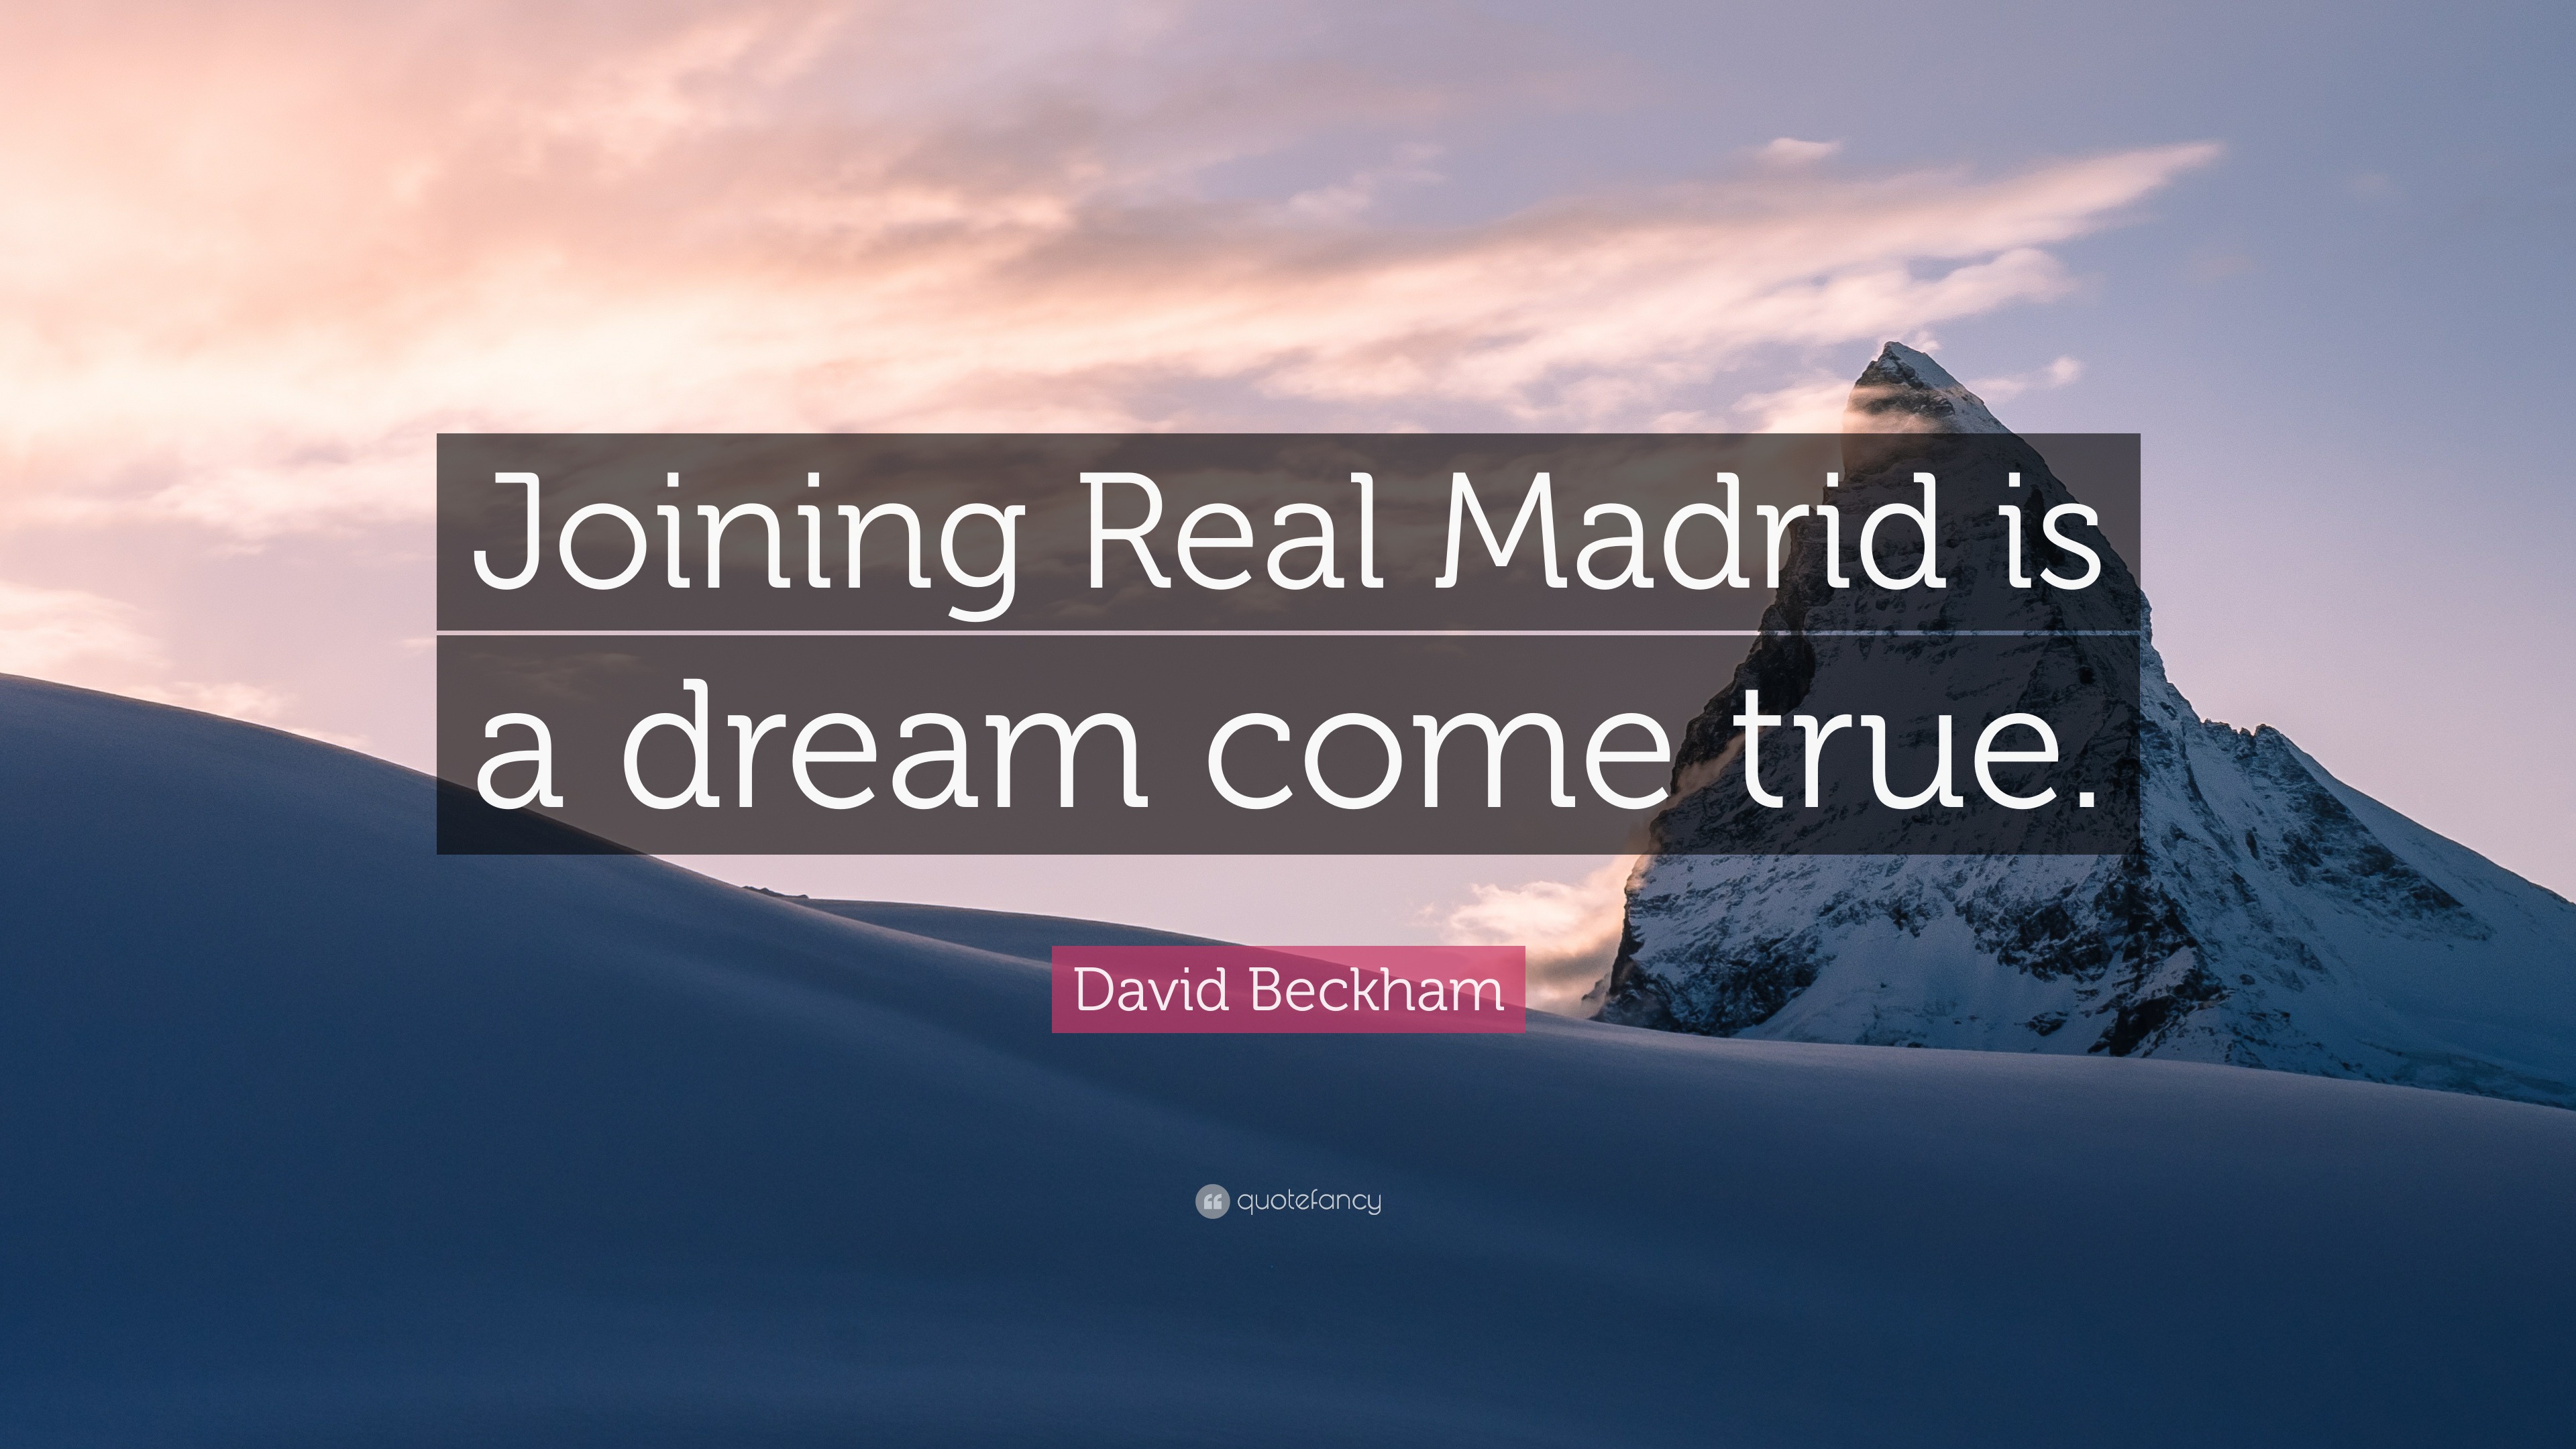 david beckham quotes